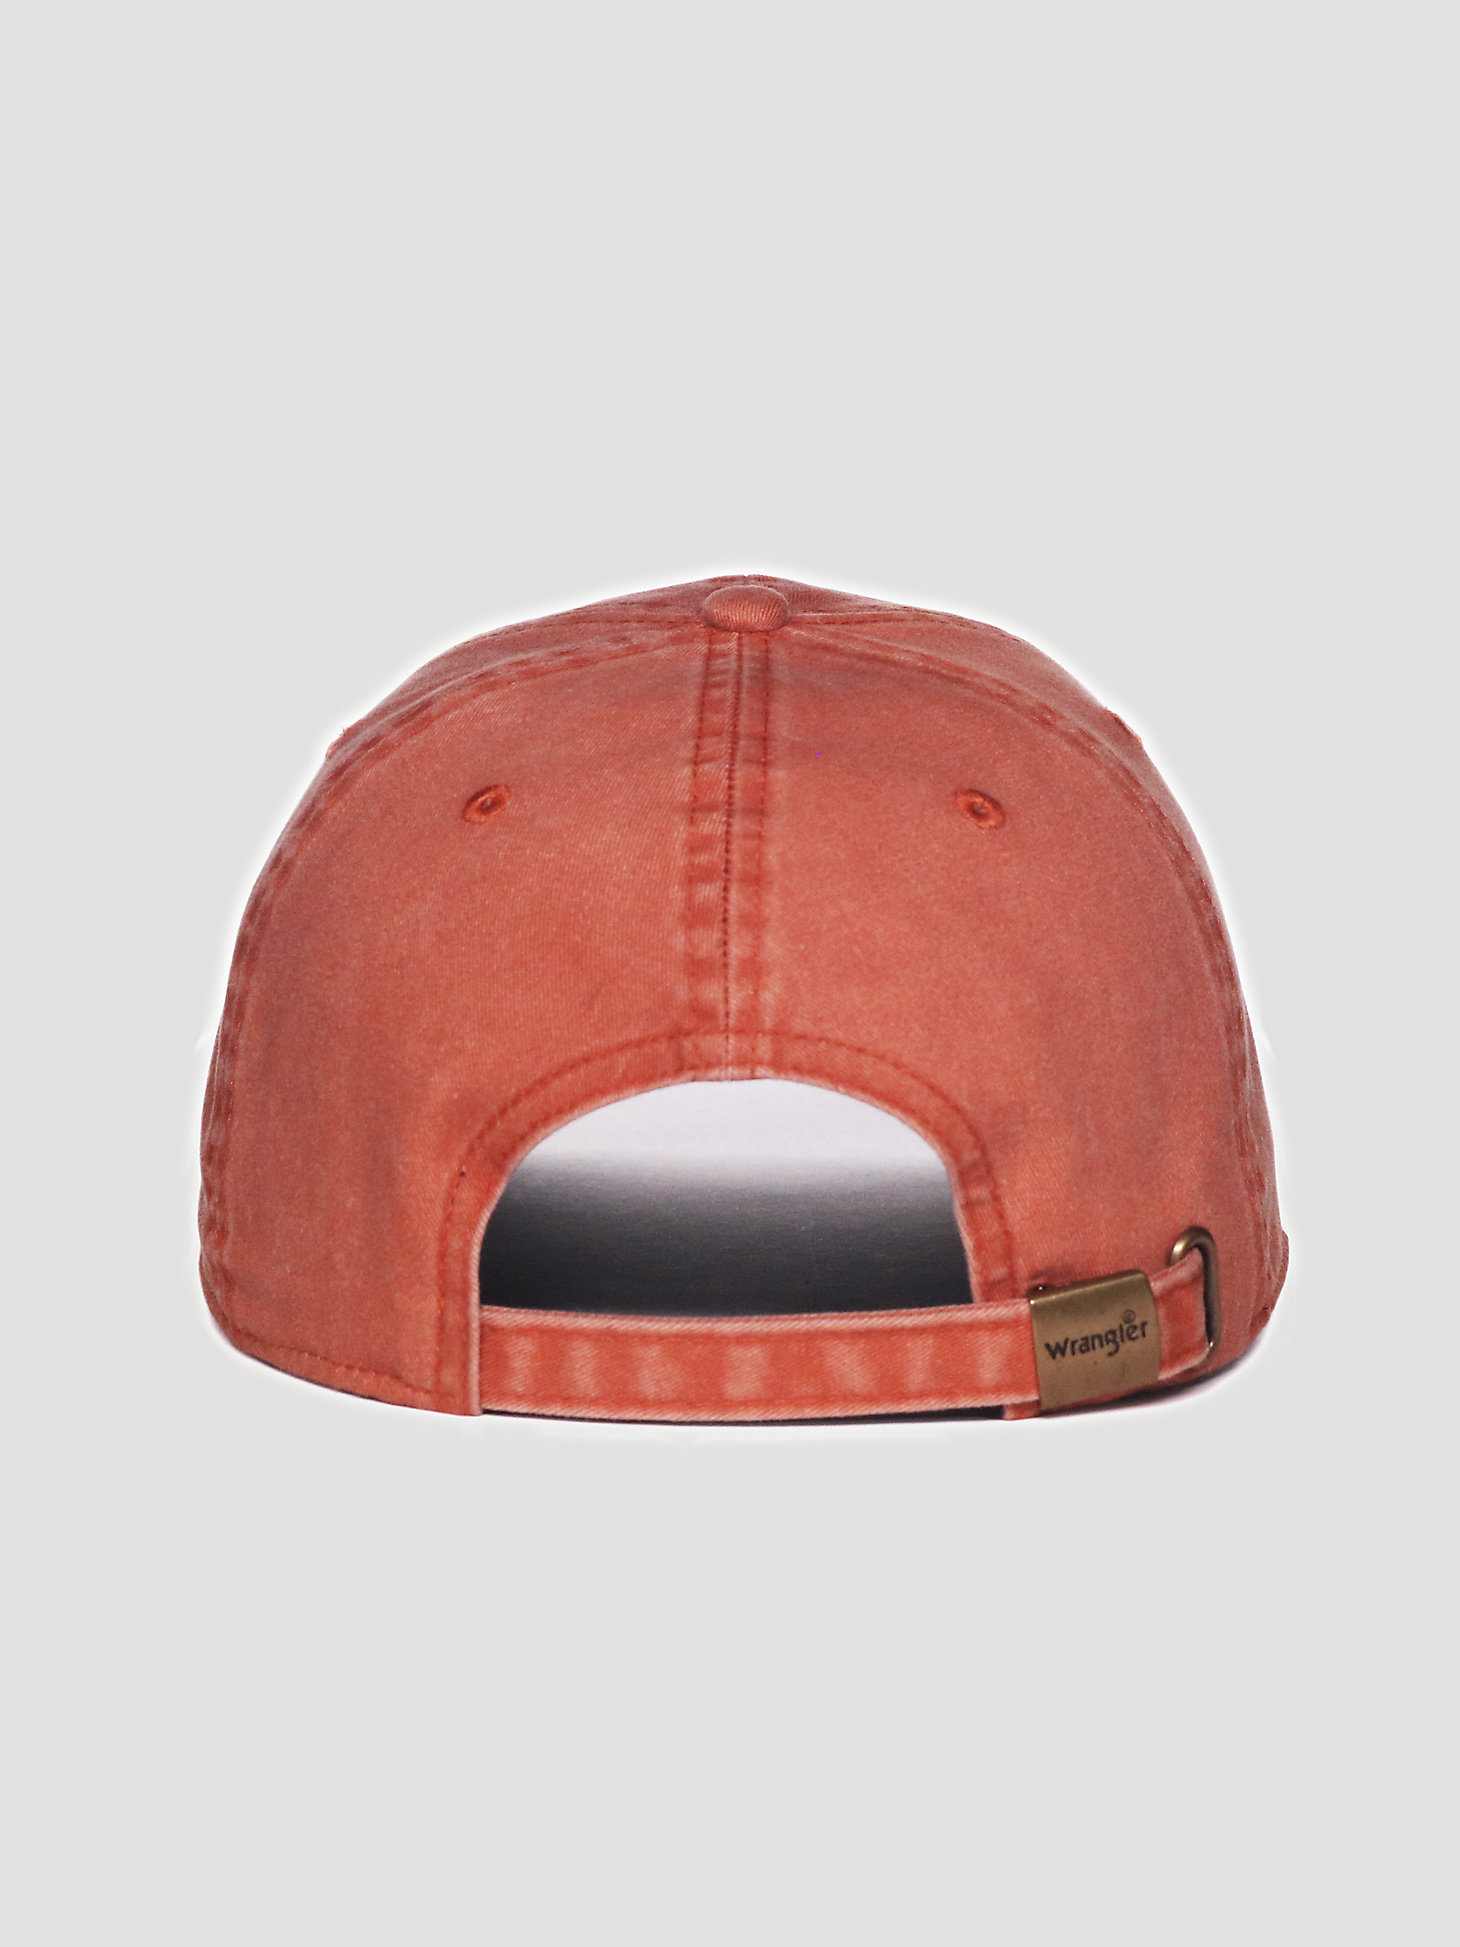 Mens Worn Wrangler Hat:Rust:ONE SIZE alternative view 2